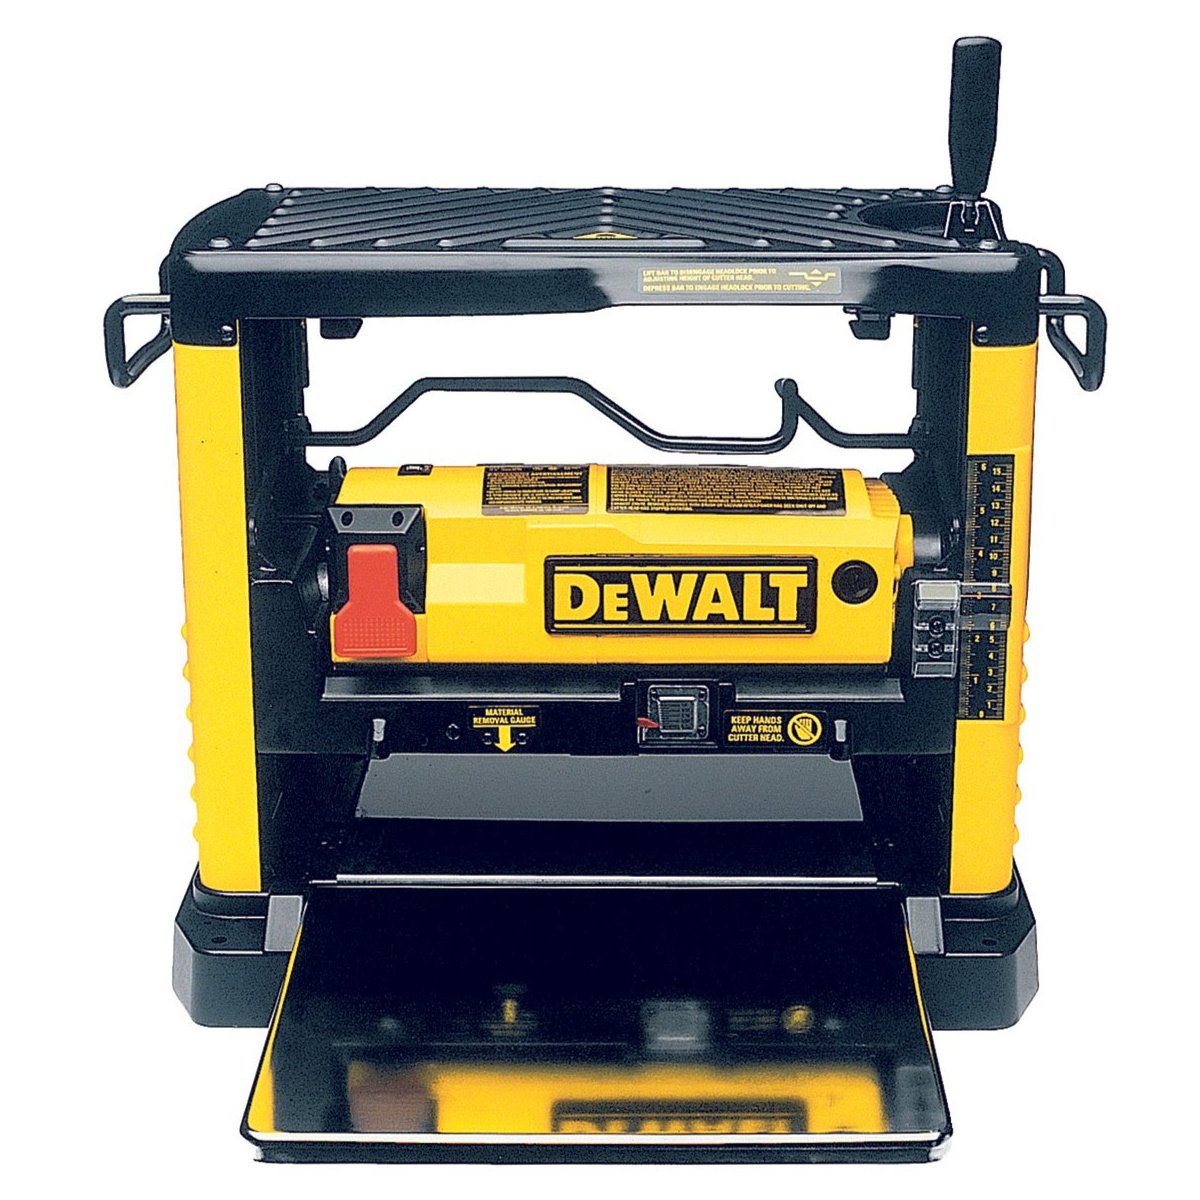 Dewalt Portable Thicknesser 317mm 1800W DW733 Power Tool Services